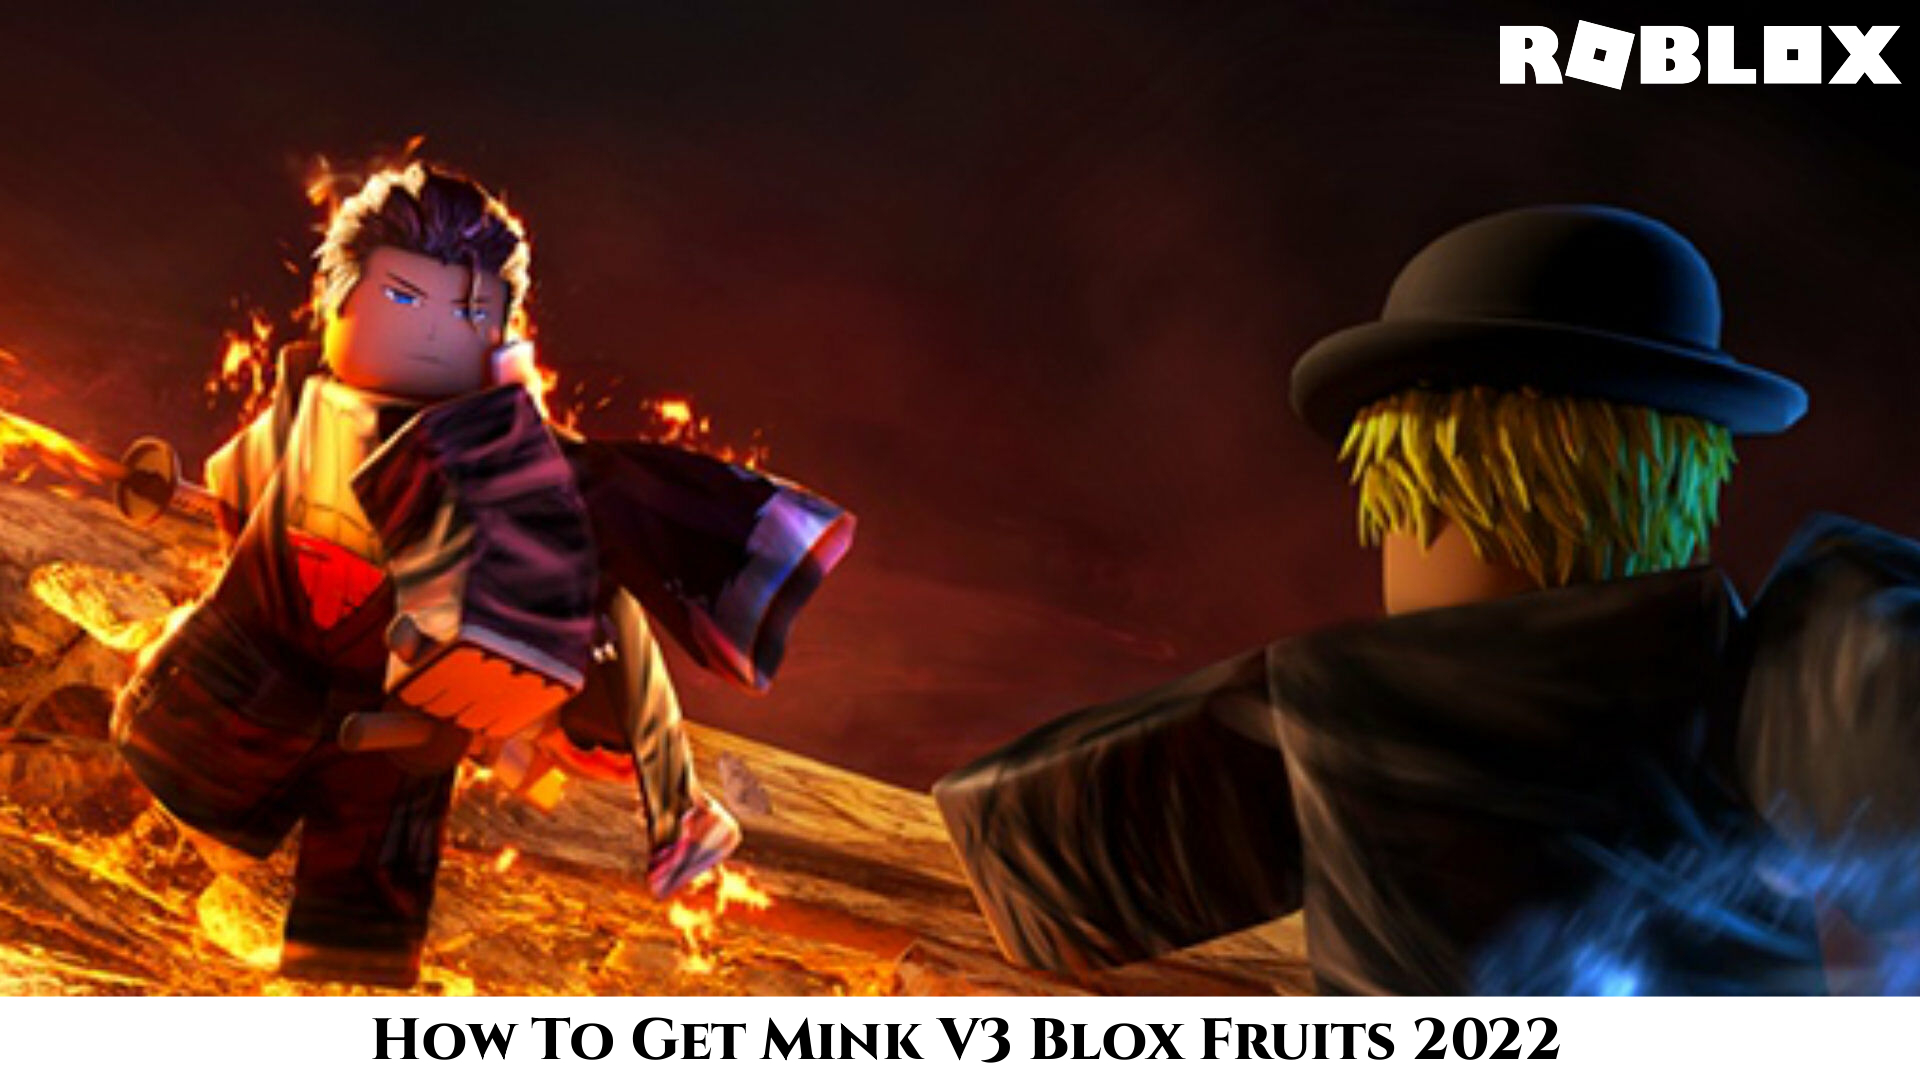 How To Get Mink V3 Blox Fruits 2022